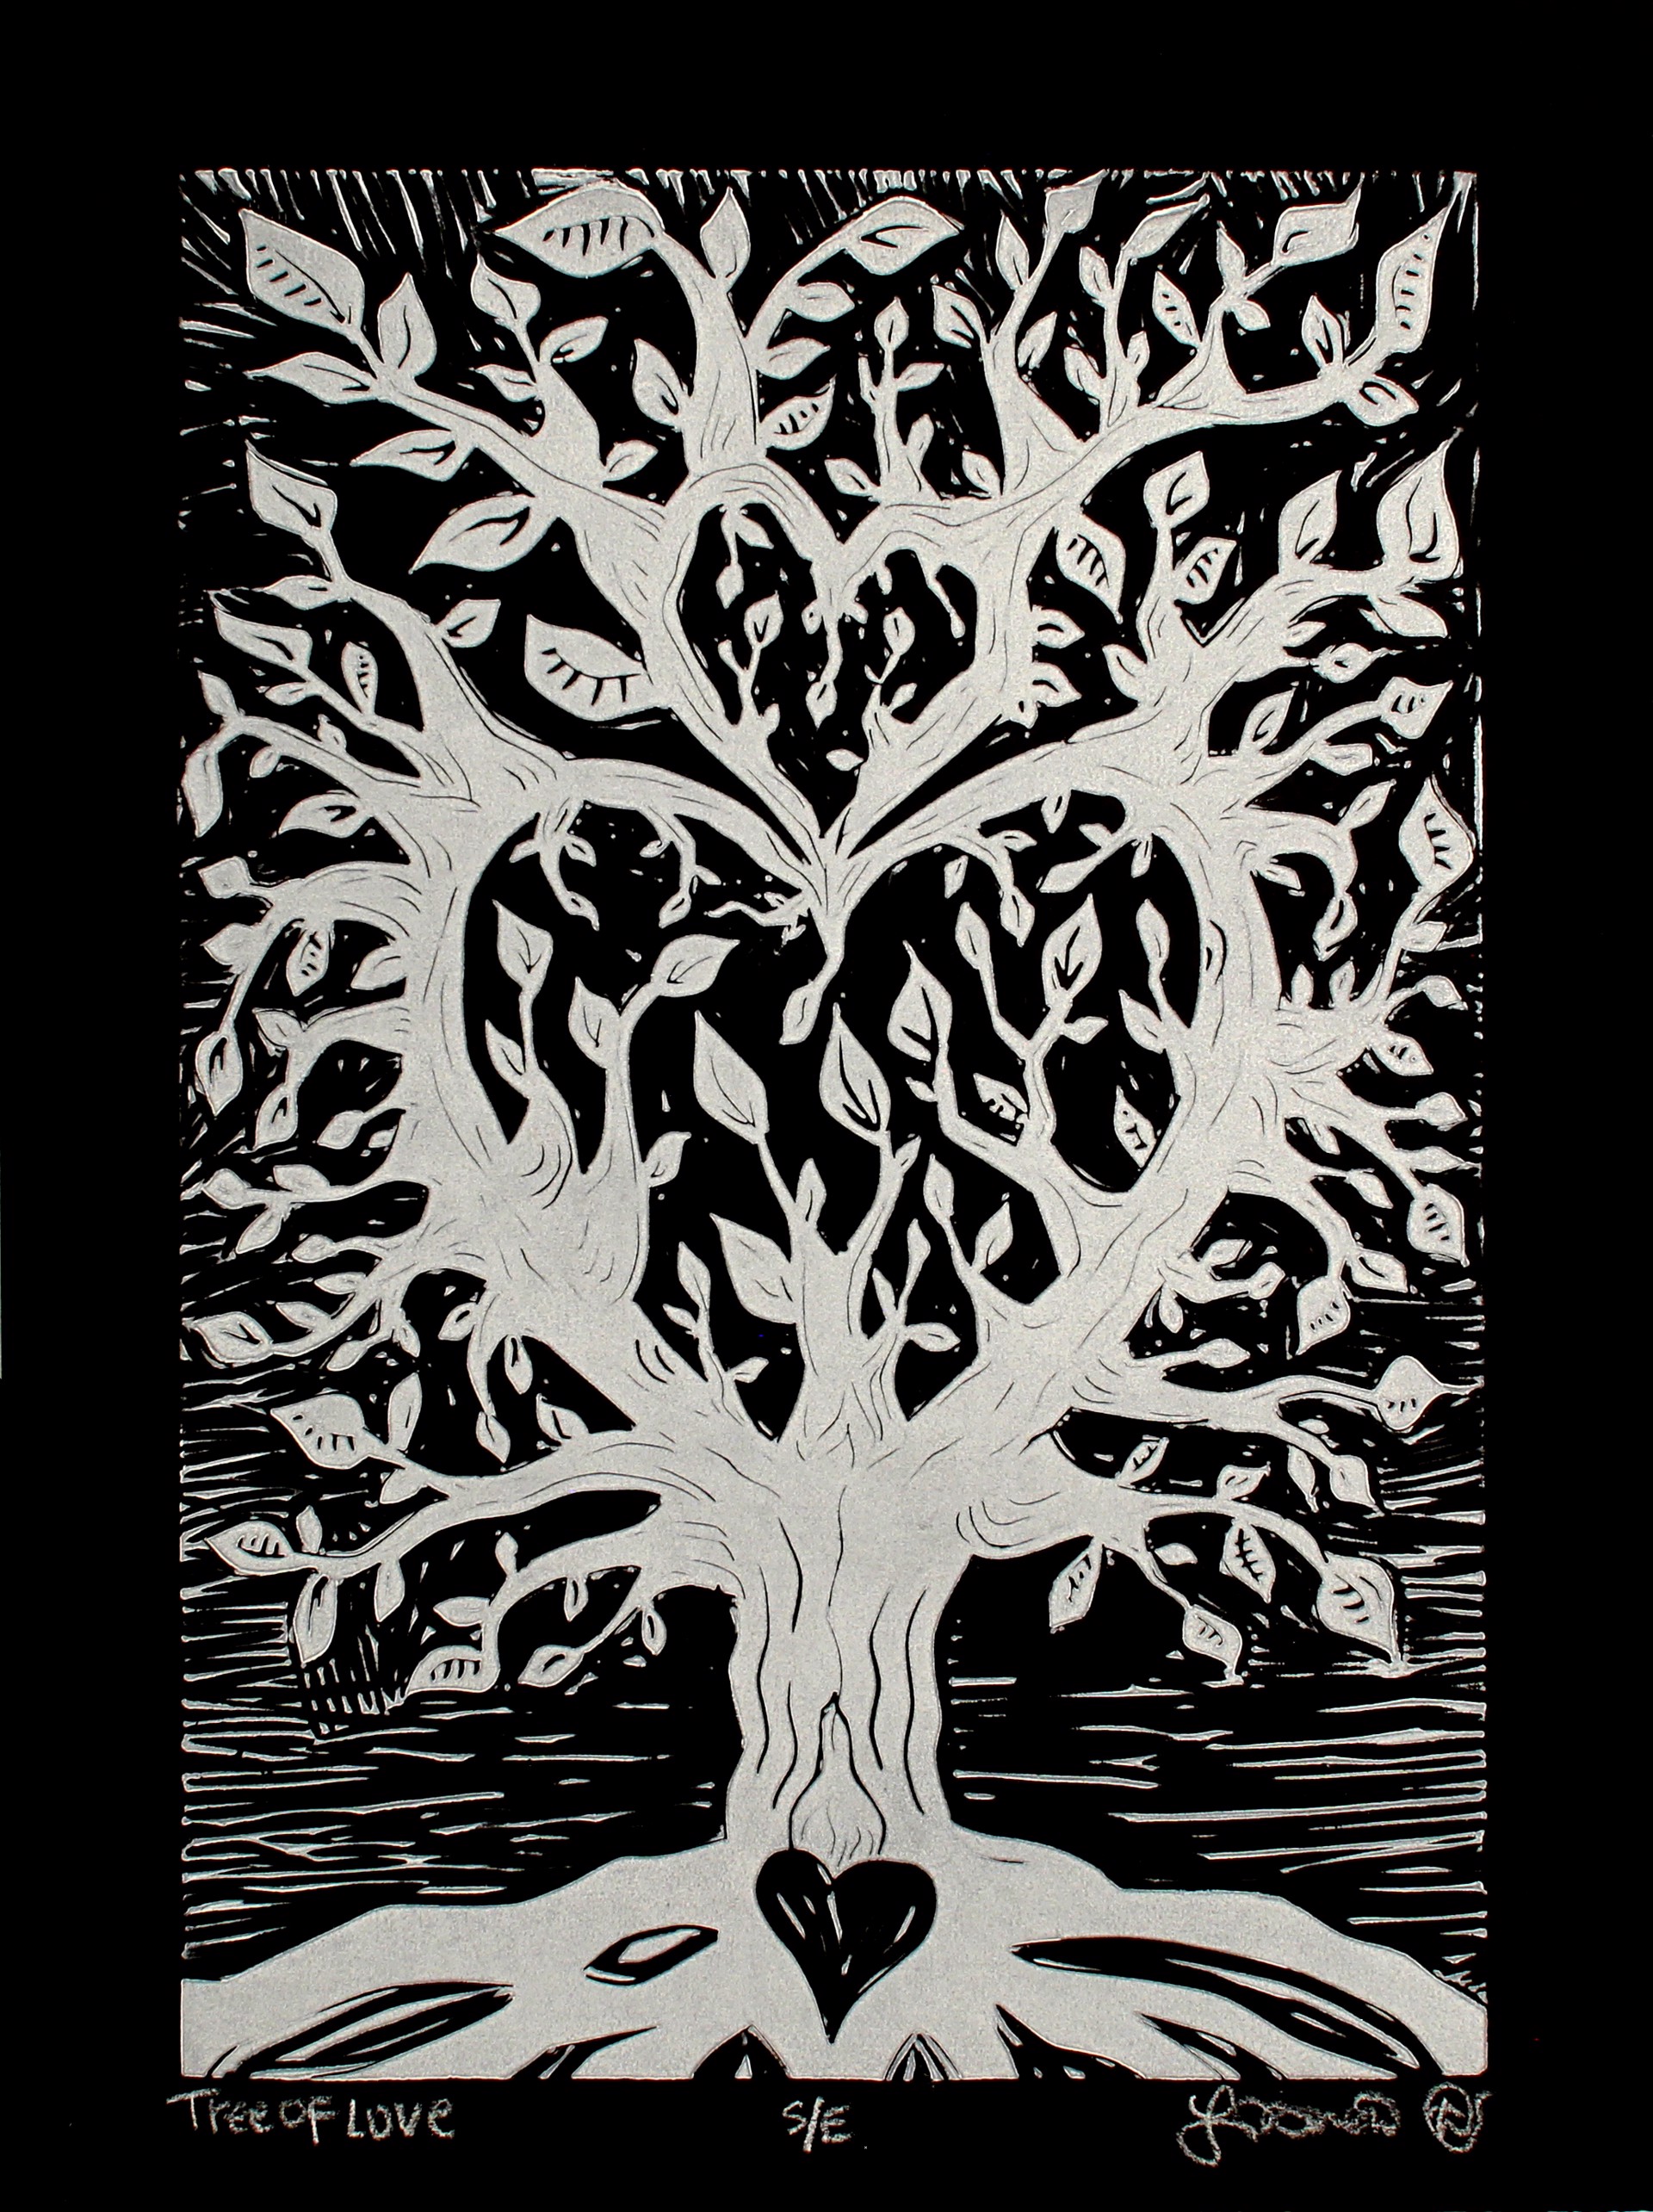 Tree of Love (S/E) by Luis Garcia